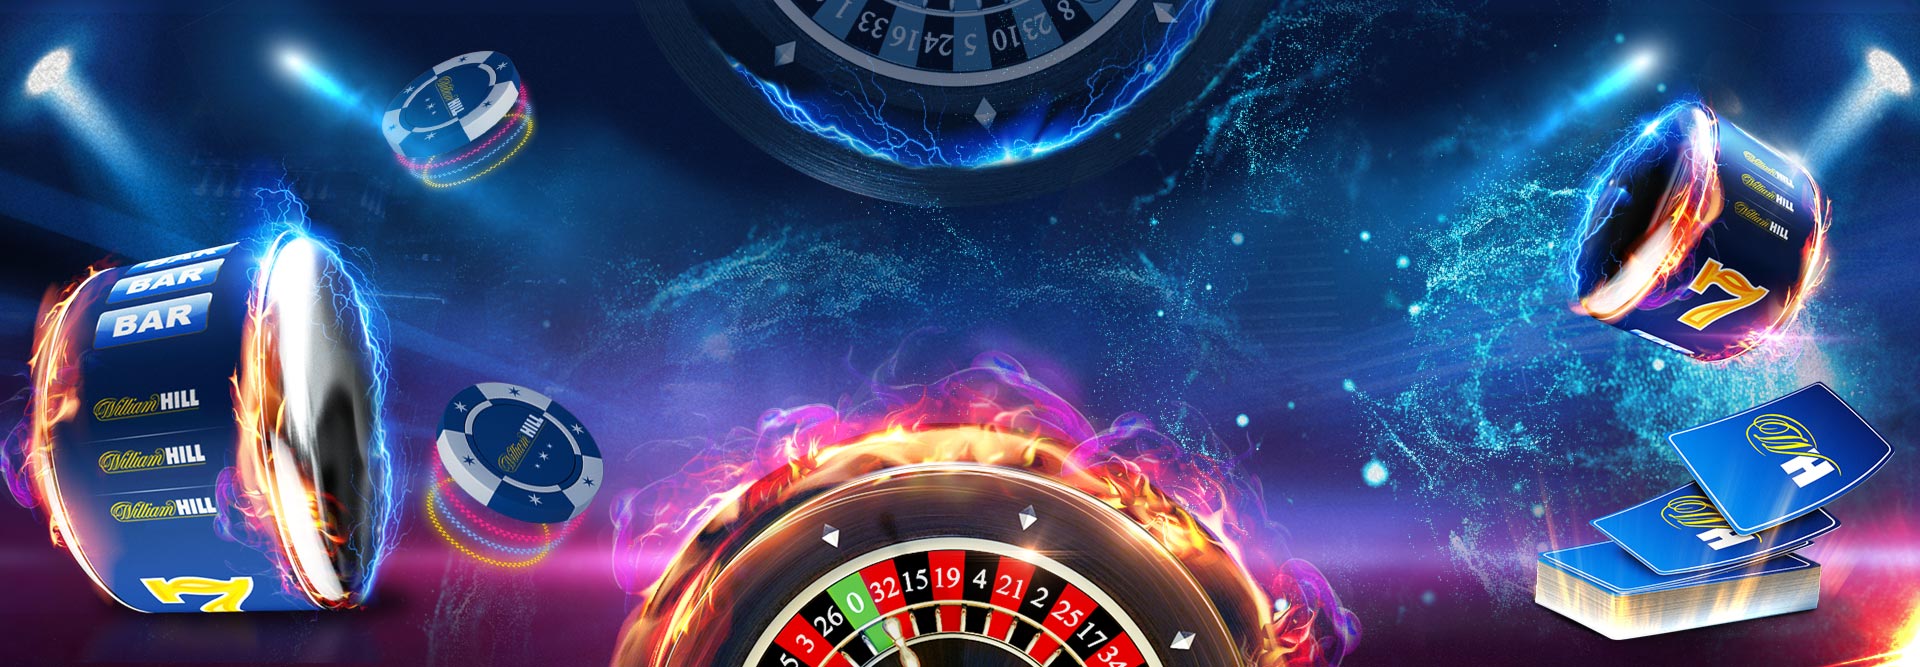 80 free spins olympus casino